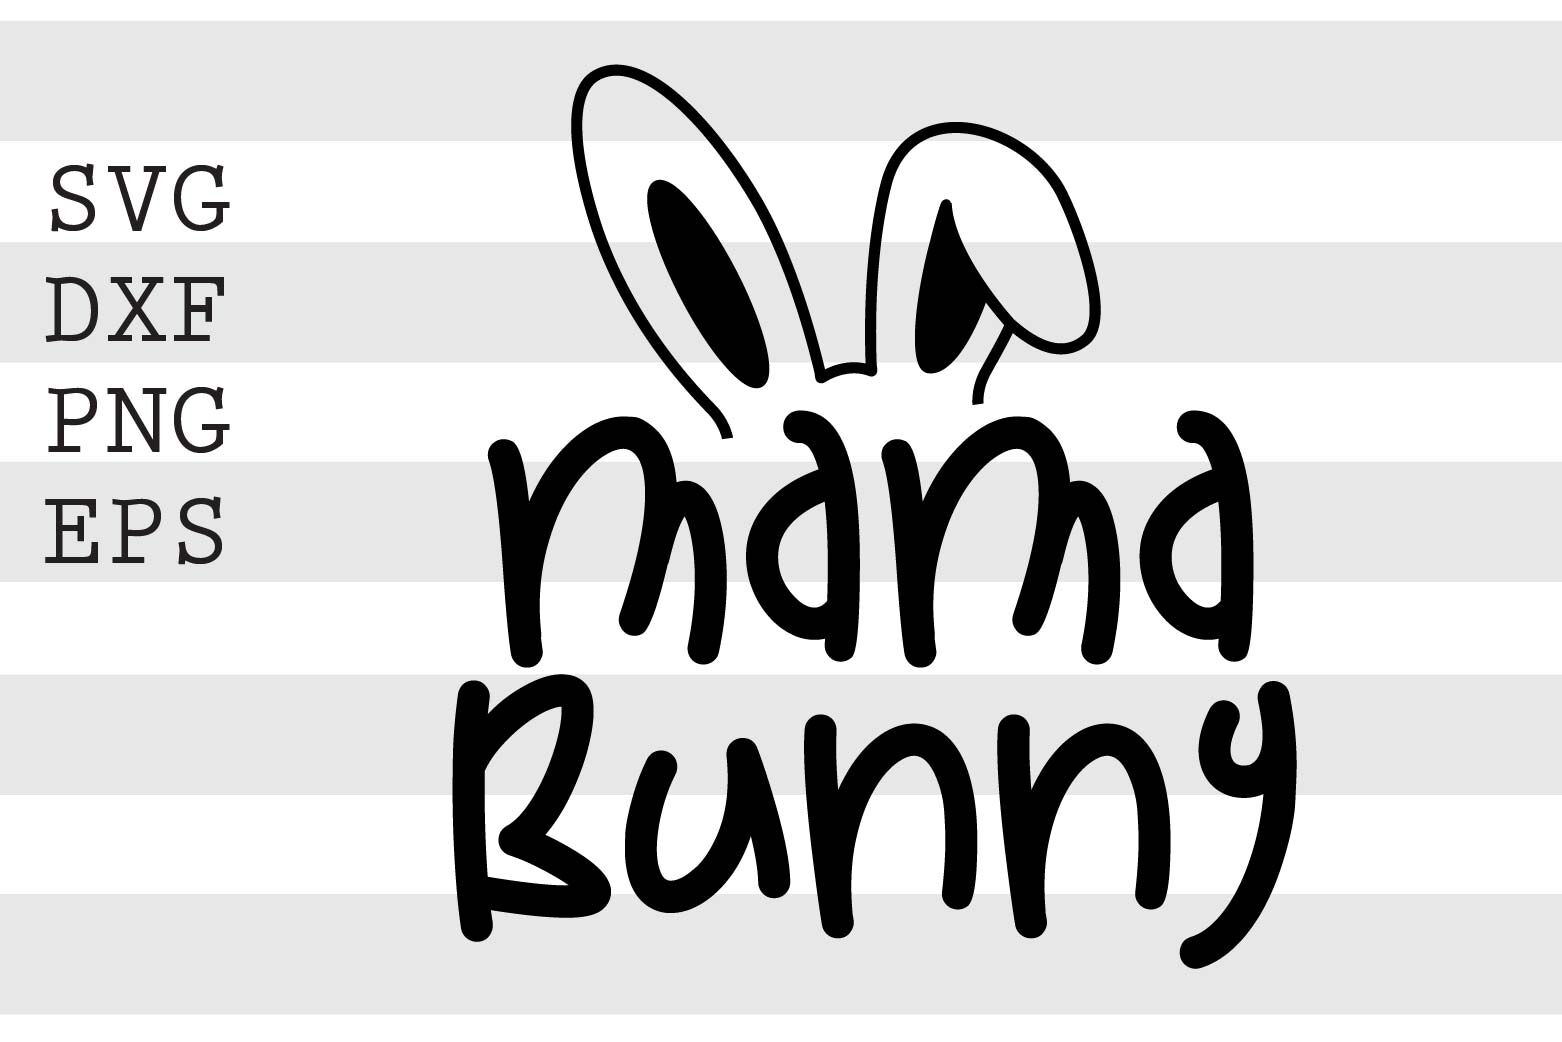 Download Mama Bunny Svg By Spoonyprint Thehungryjpeg Com